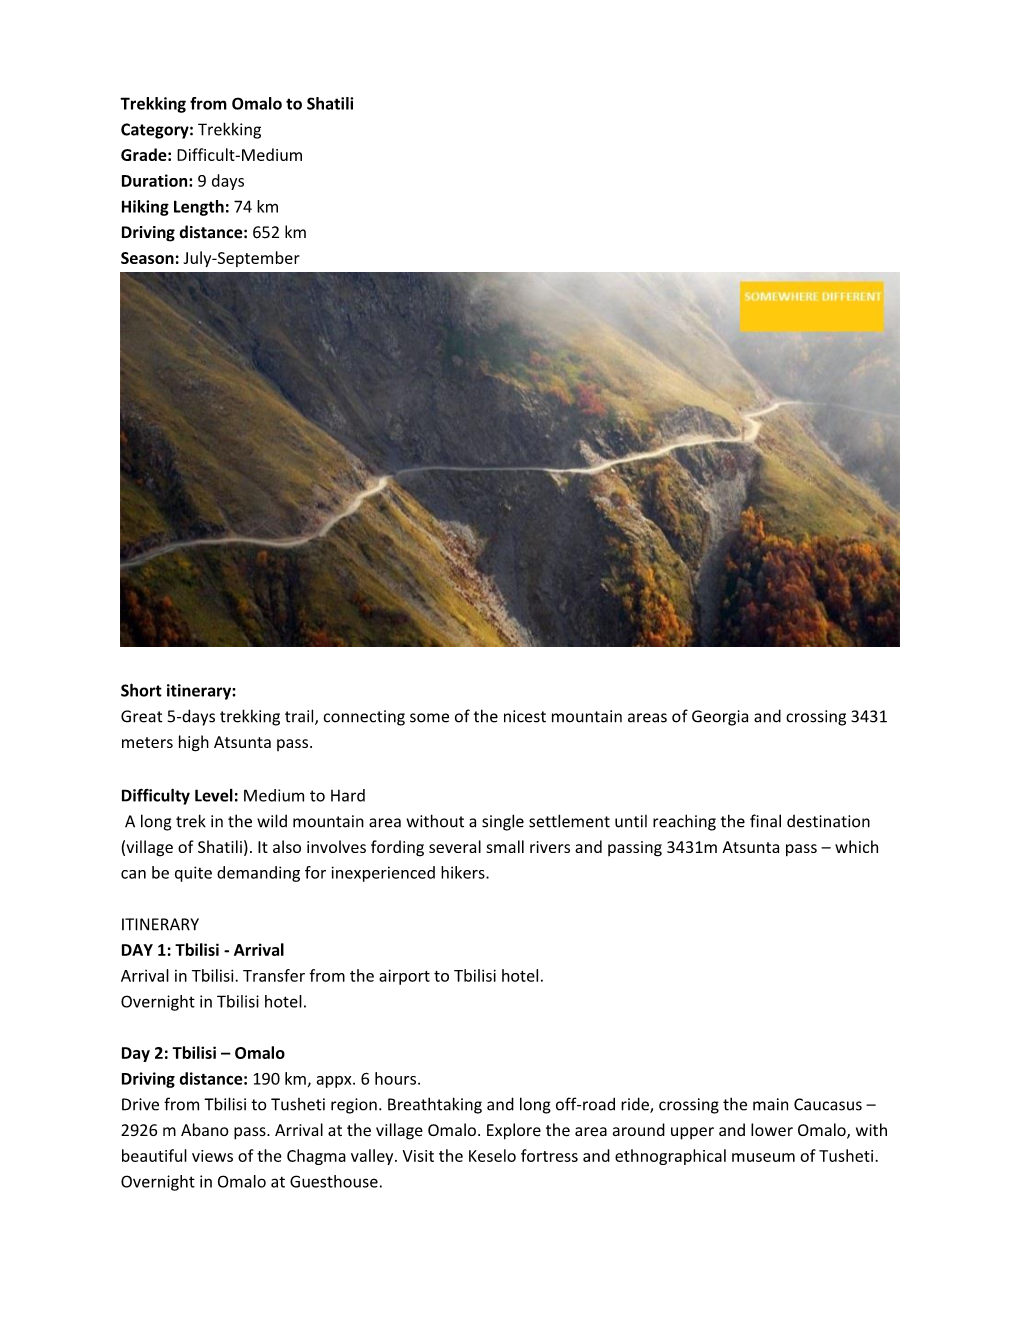 Shatili Category: Trekking Grade: Difficult-Medium Duration: 9 Days Hiking Length: 74 Km Driving Distance: 652 Km Season: July-September